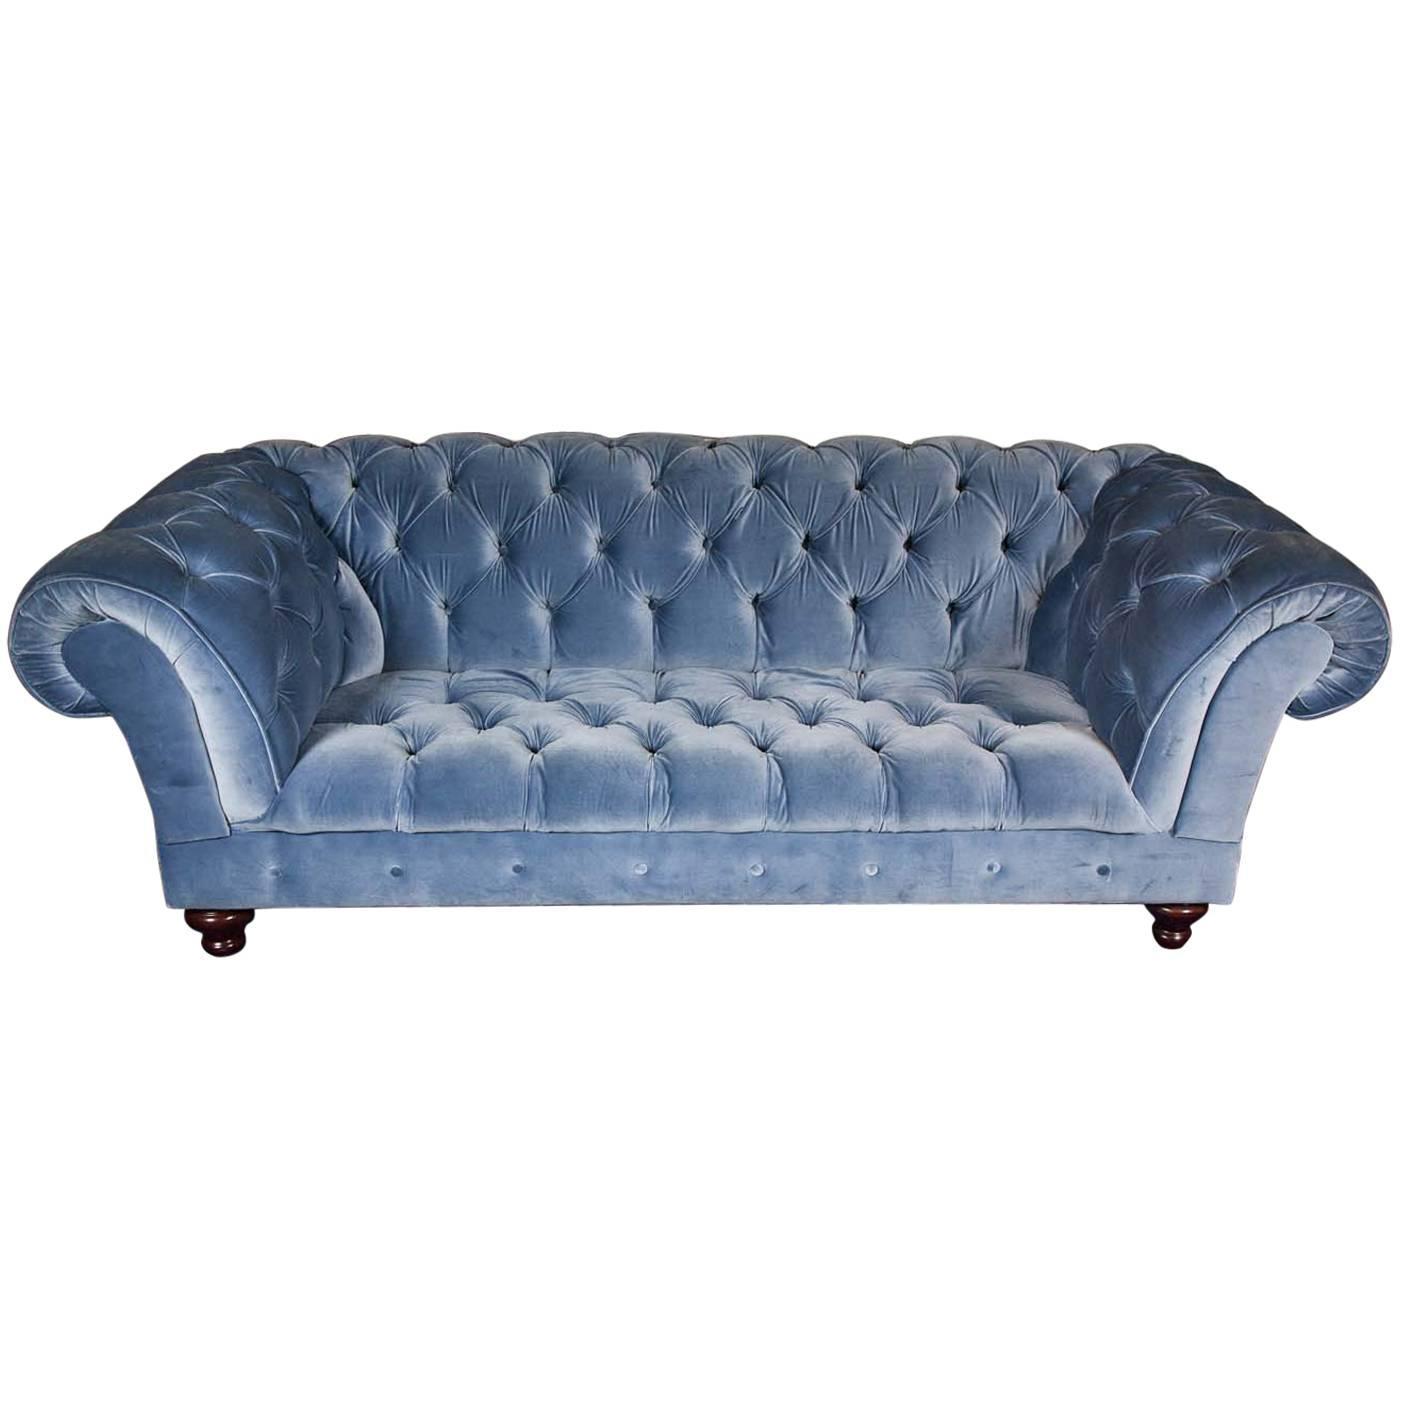 Bespoke Blue Velvet Chesterfield Sofa By Pitfield London For Sale